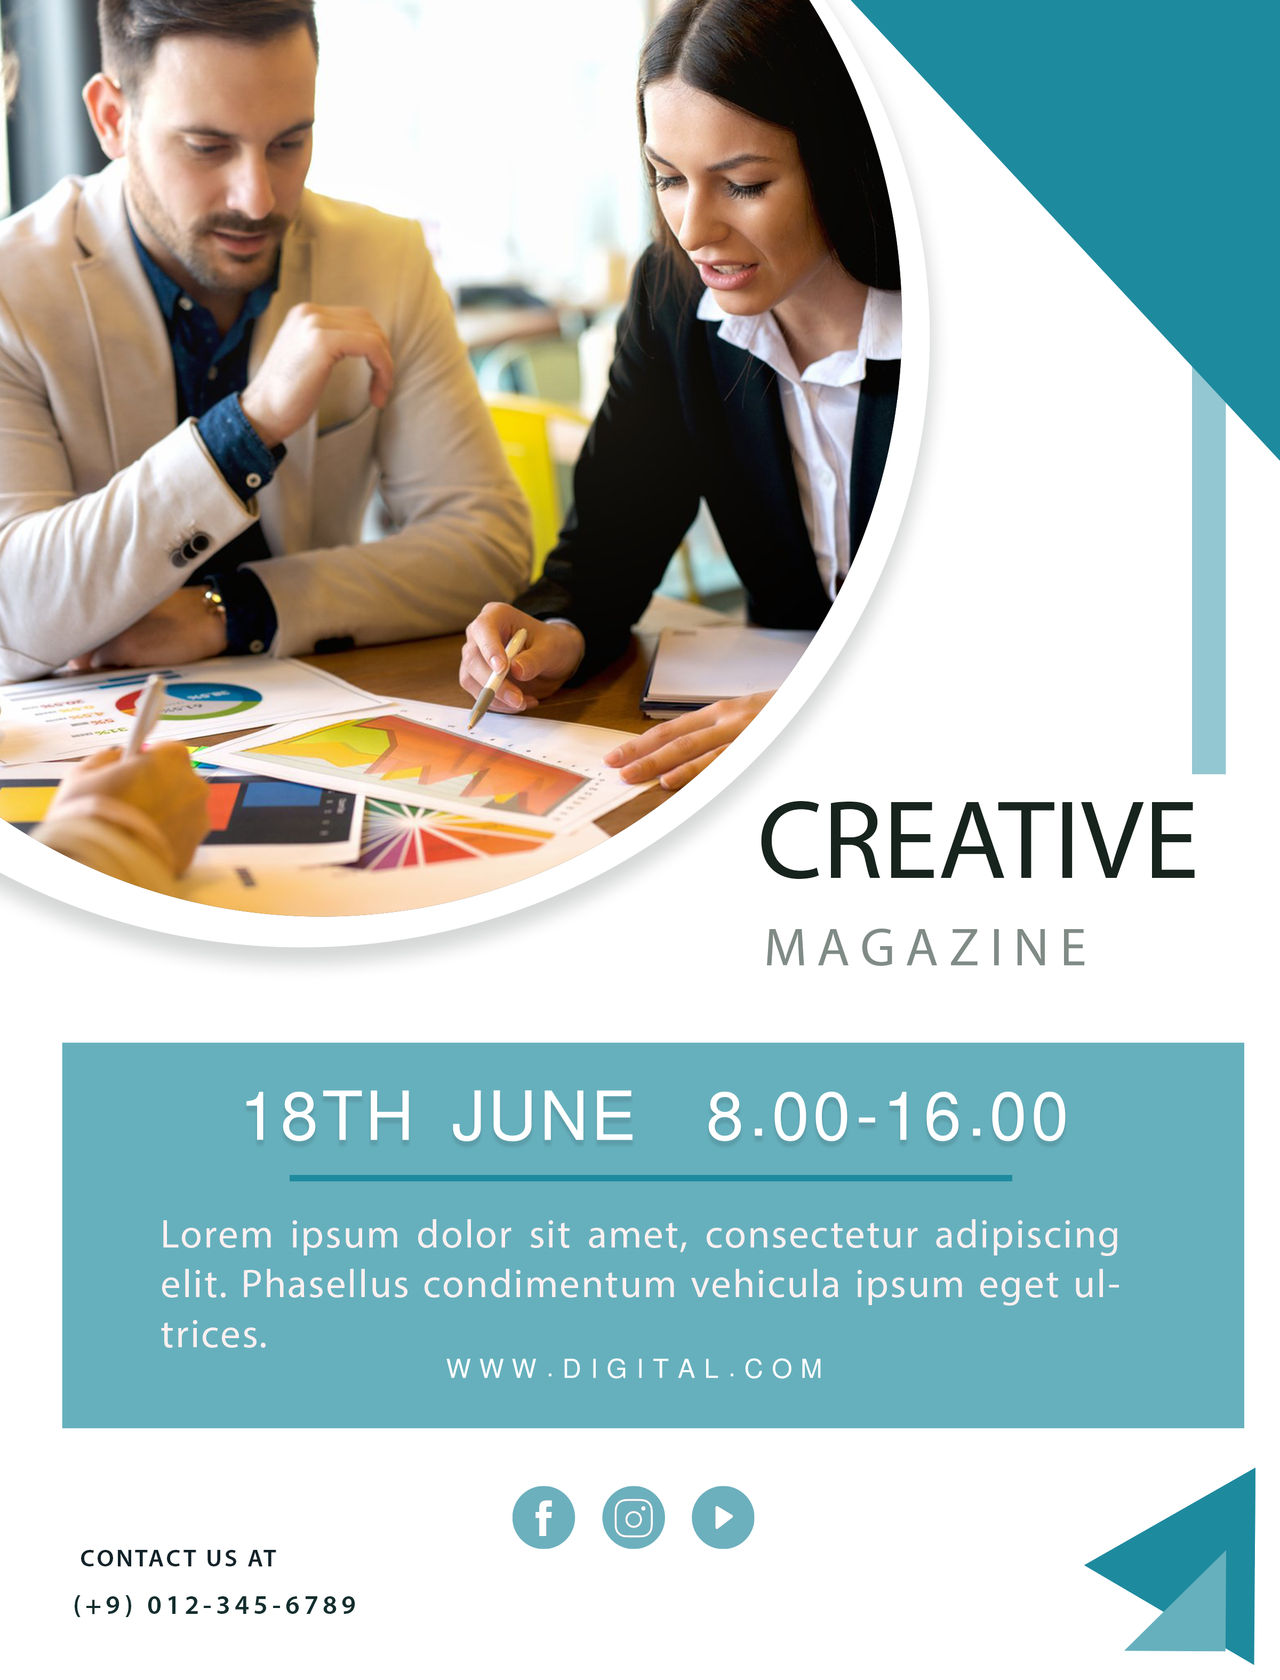 Digital marketing magazine by Pratyashasarma on DeviantArt